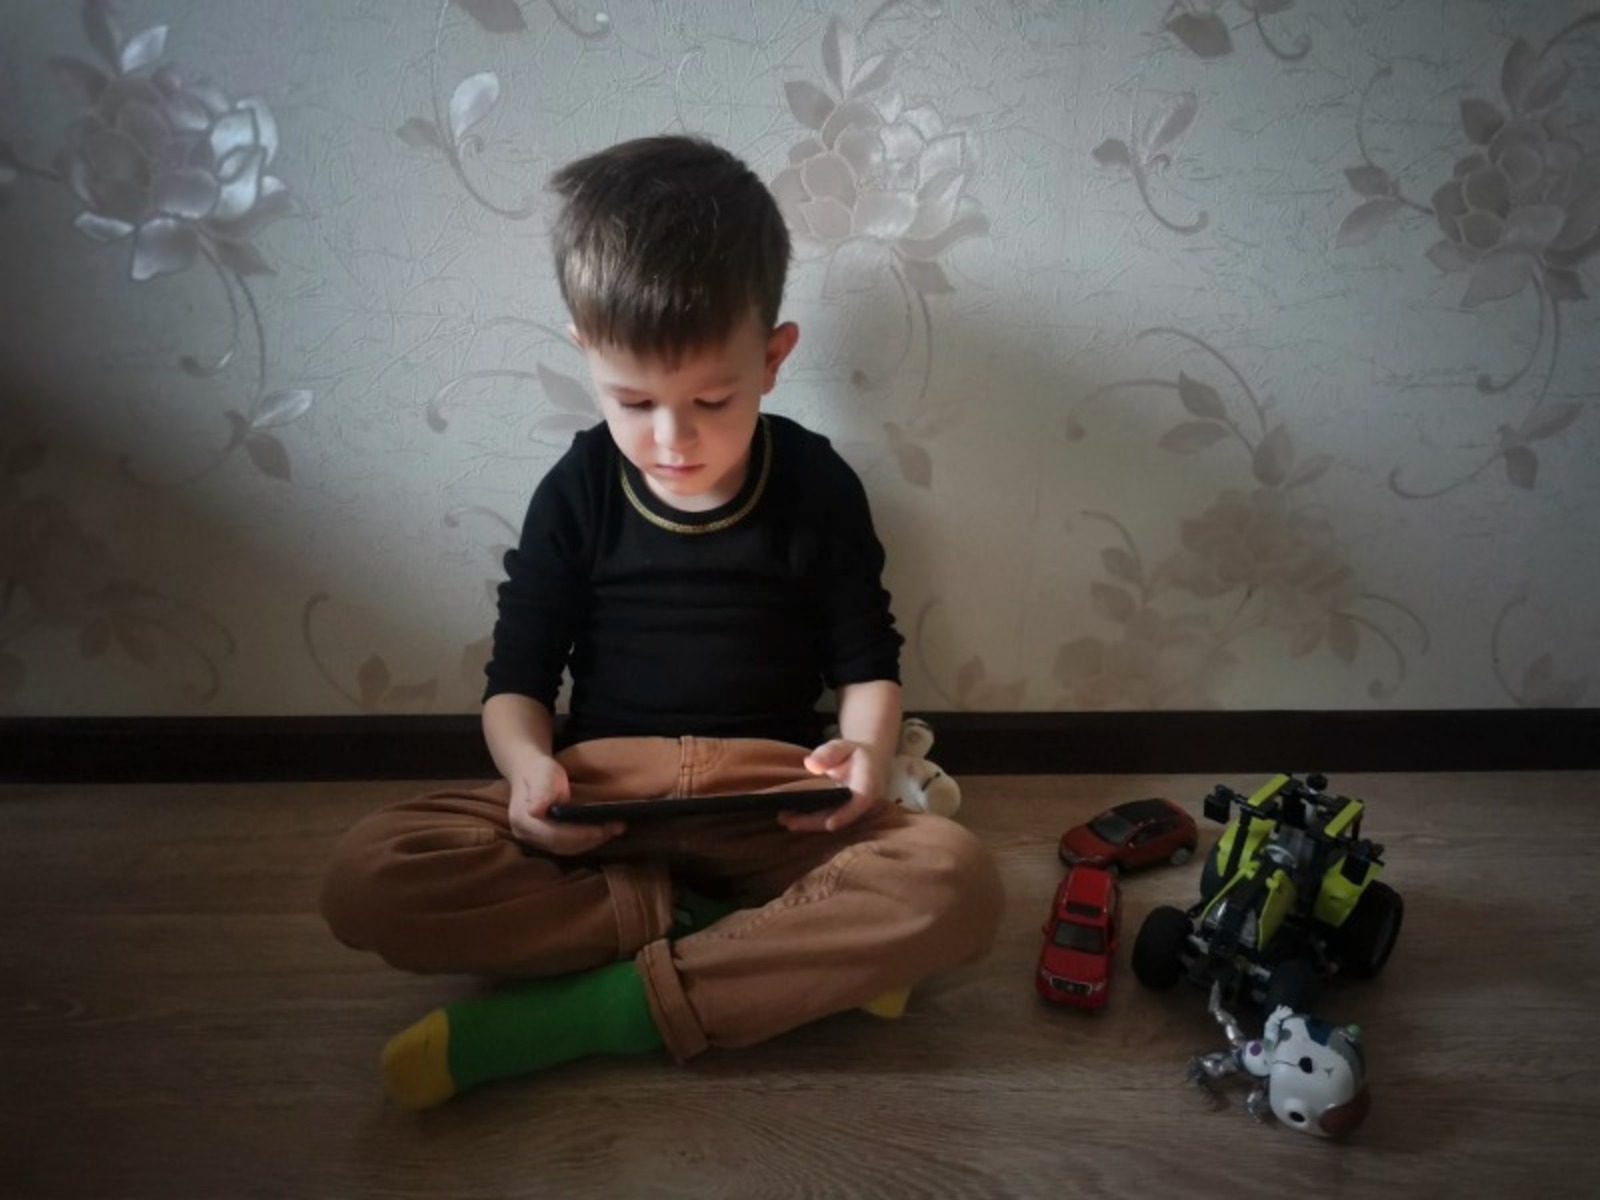 Смартфон не заменит игрушки, но станет хорошим помощником в обучении и развитии ребенка. /  Фото: Анастасия Нигматуллина